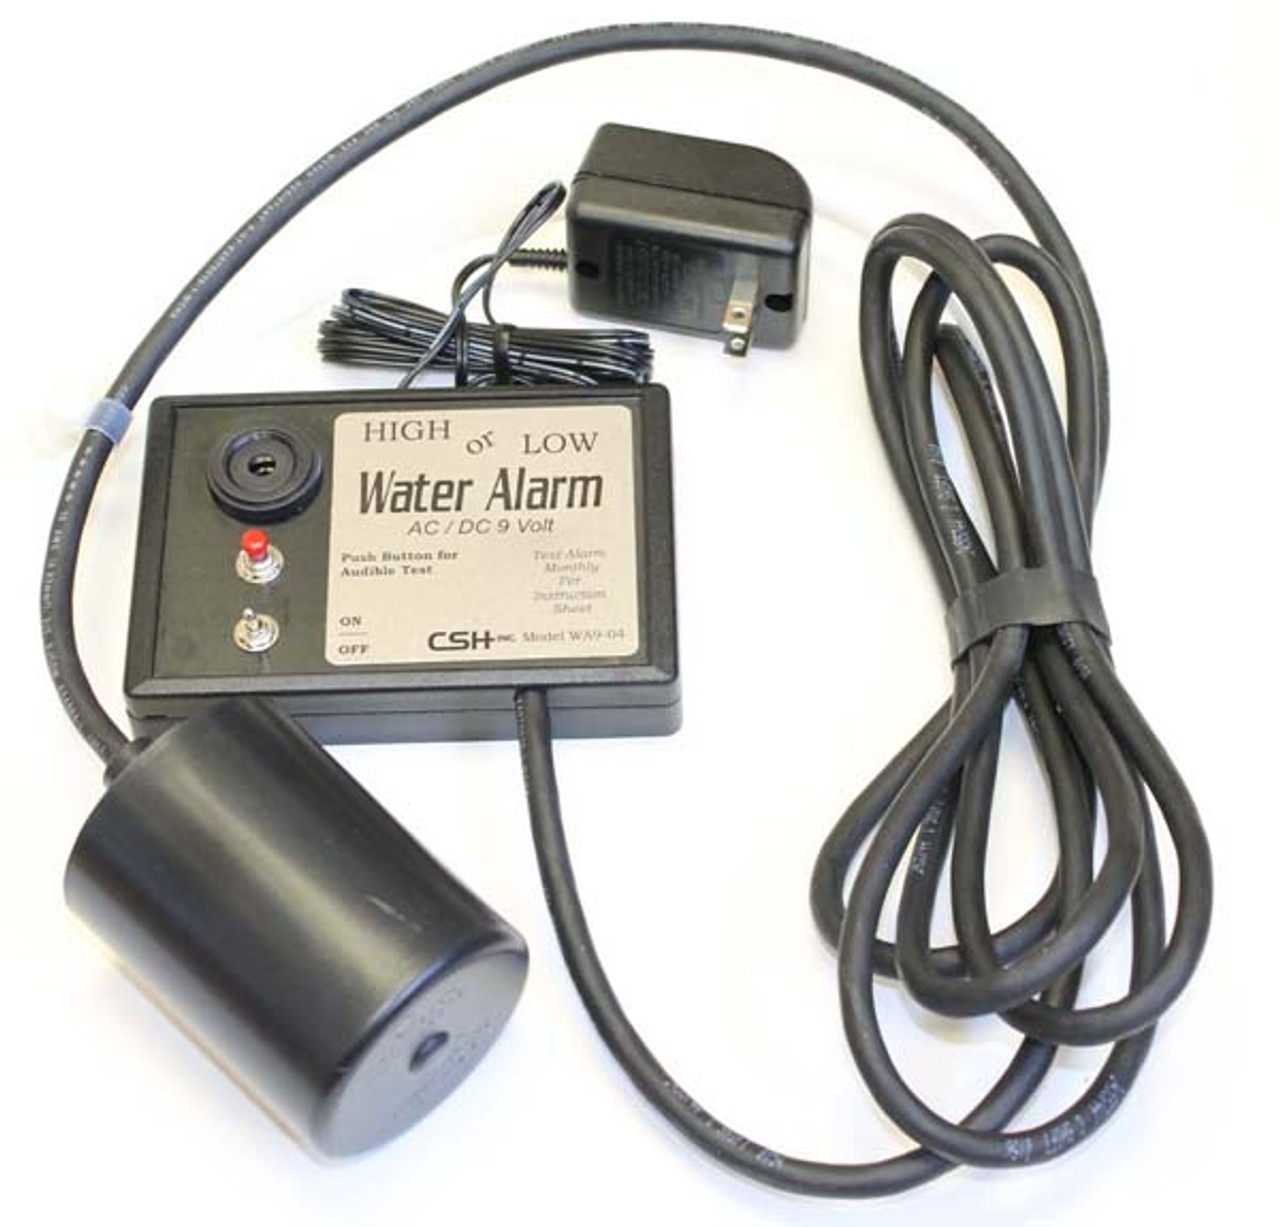 WA9-04-50 High or Low Water Alarm